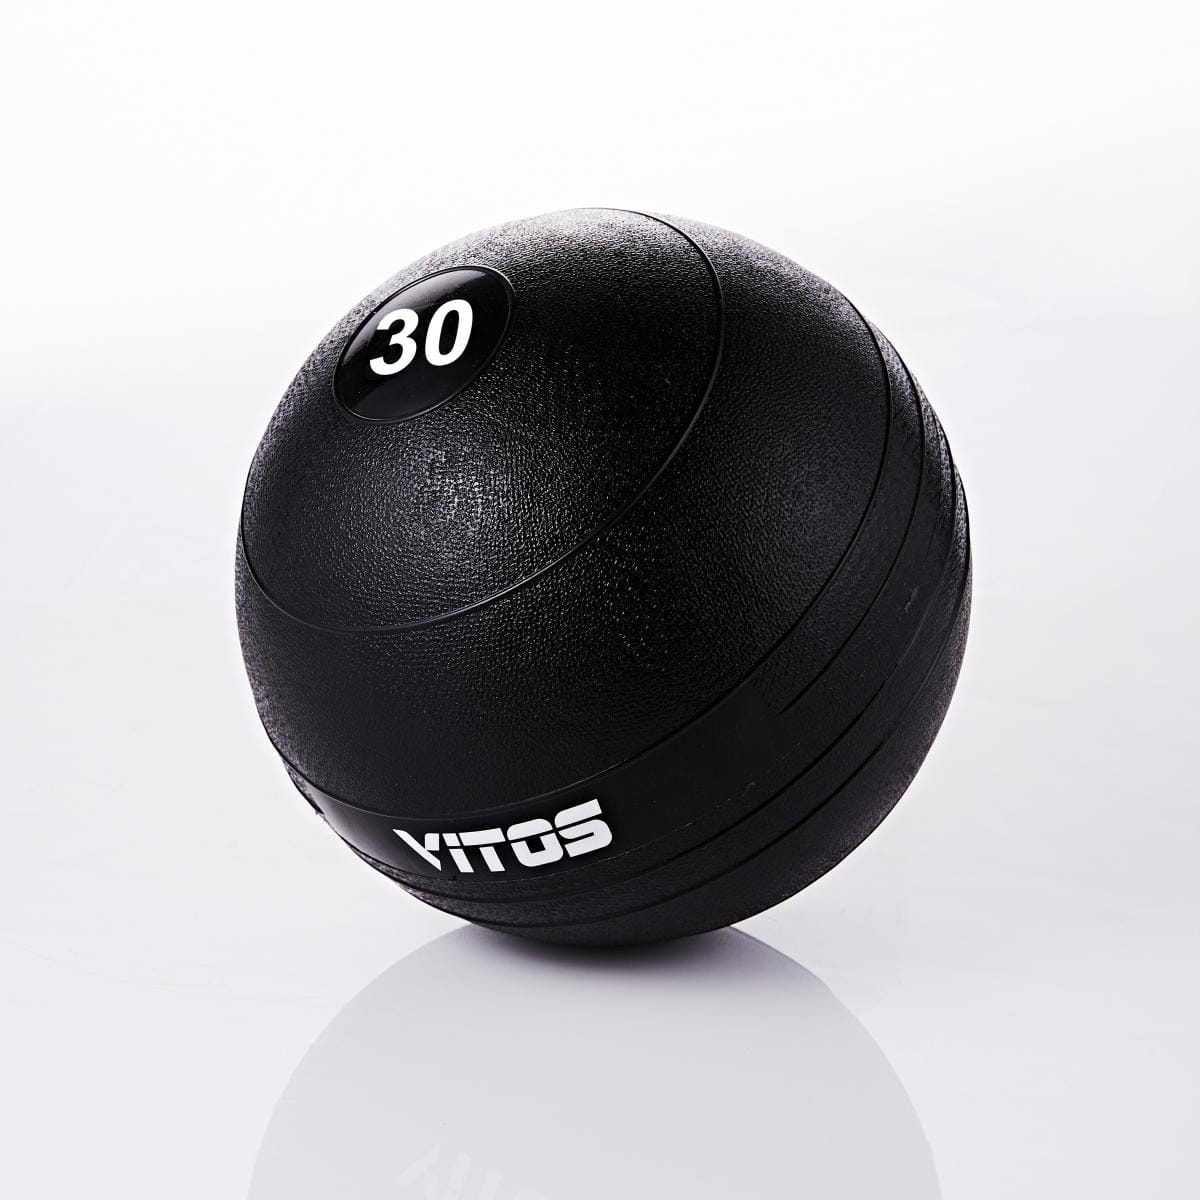 VITOS 重力球 30磅 14公斤 0